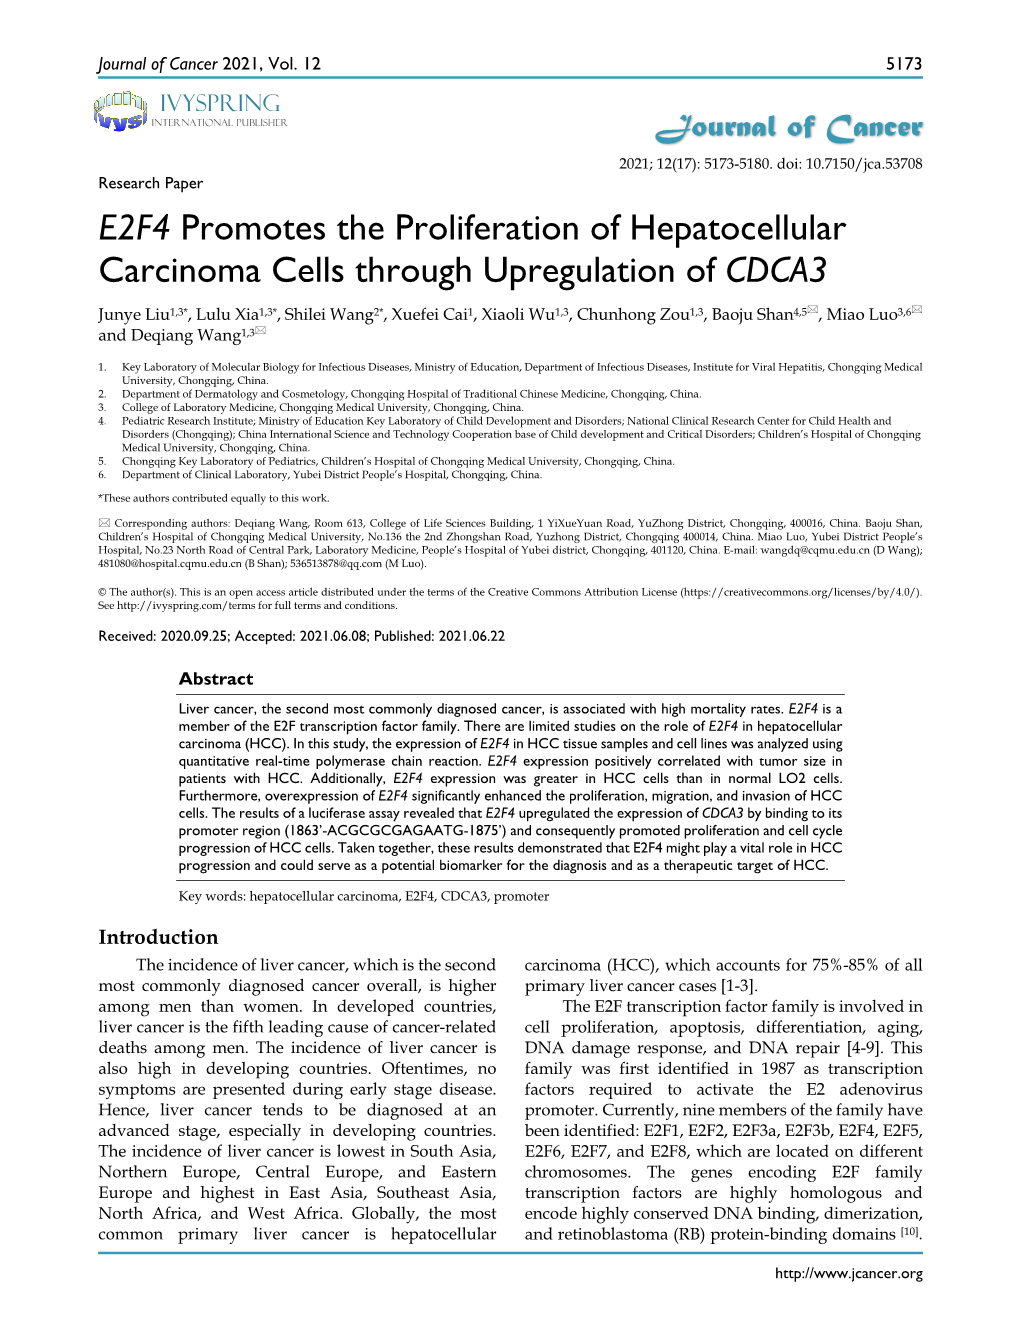 E2F4 Promotes the Proliferation of Hepatocellular Carcinoma Cells